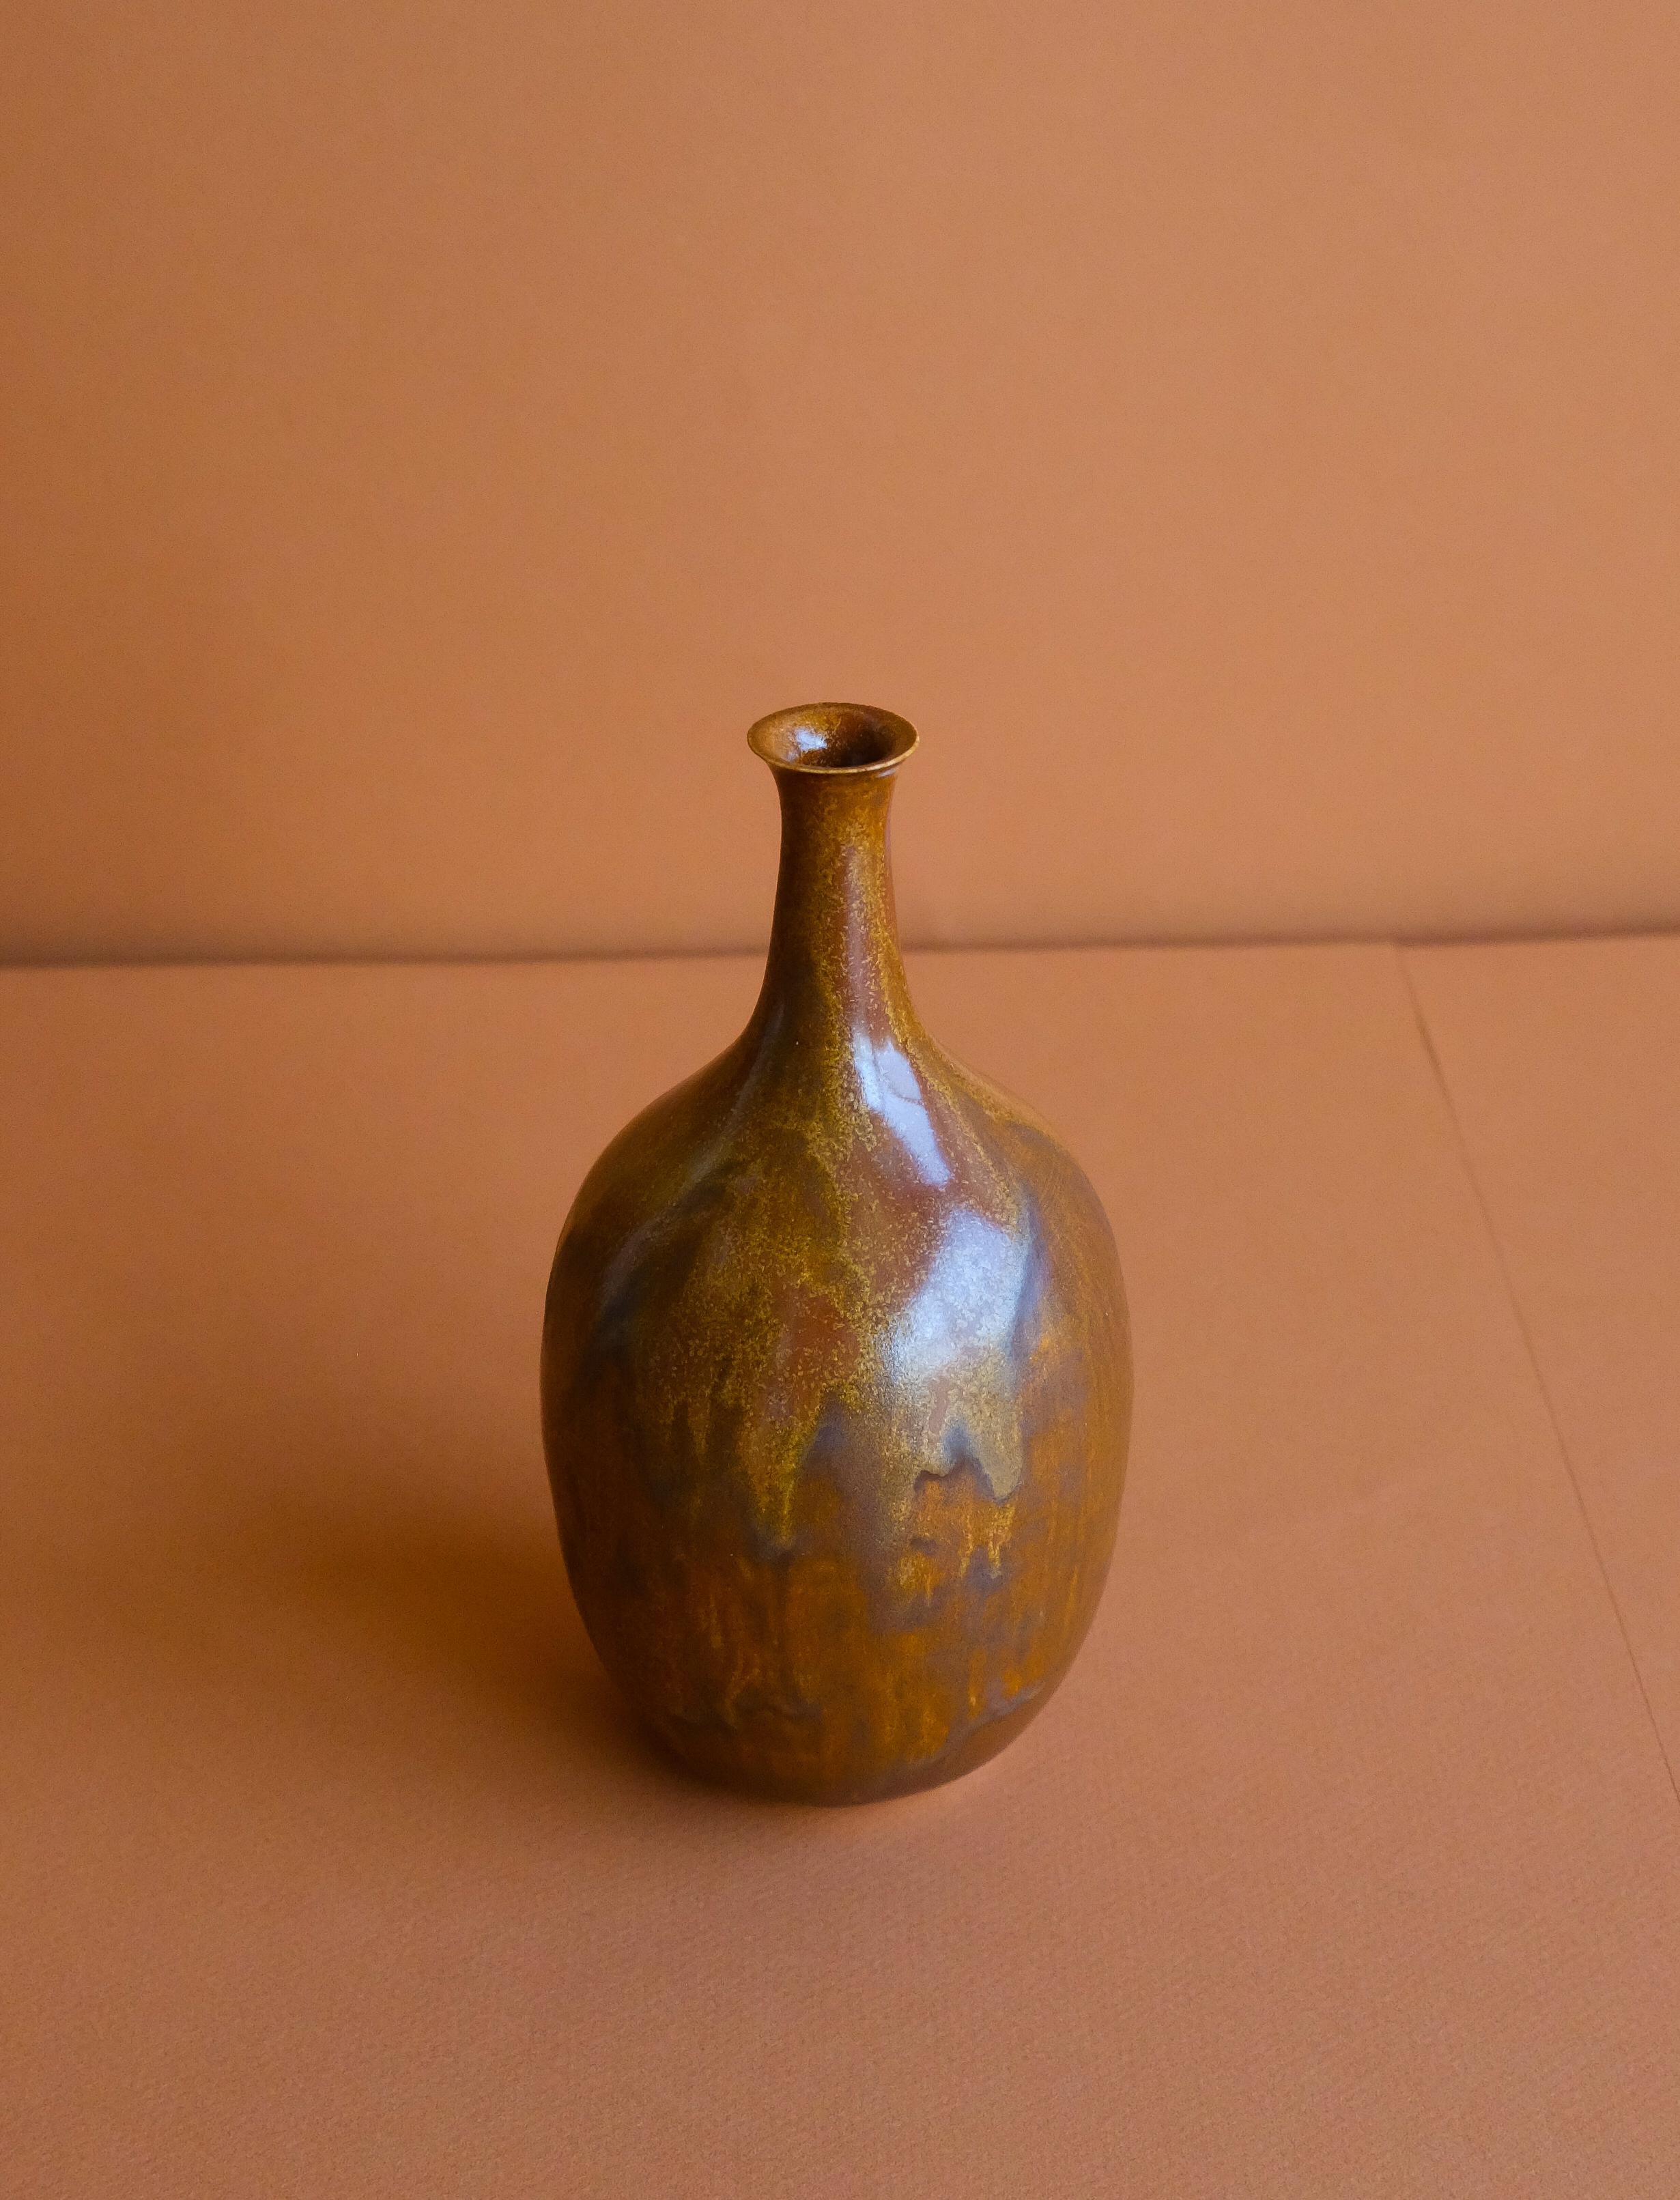 Bud Porcelain Ceramic Vase - High Fire Reduction Glaze - Vietnamese Design  For Sale 1